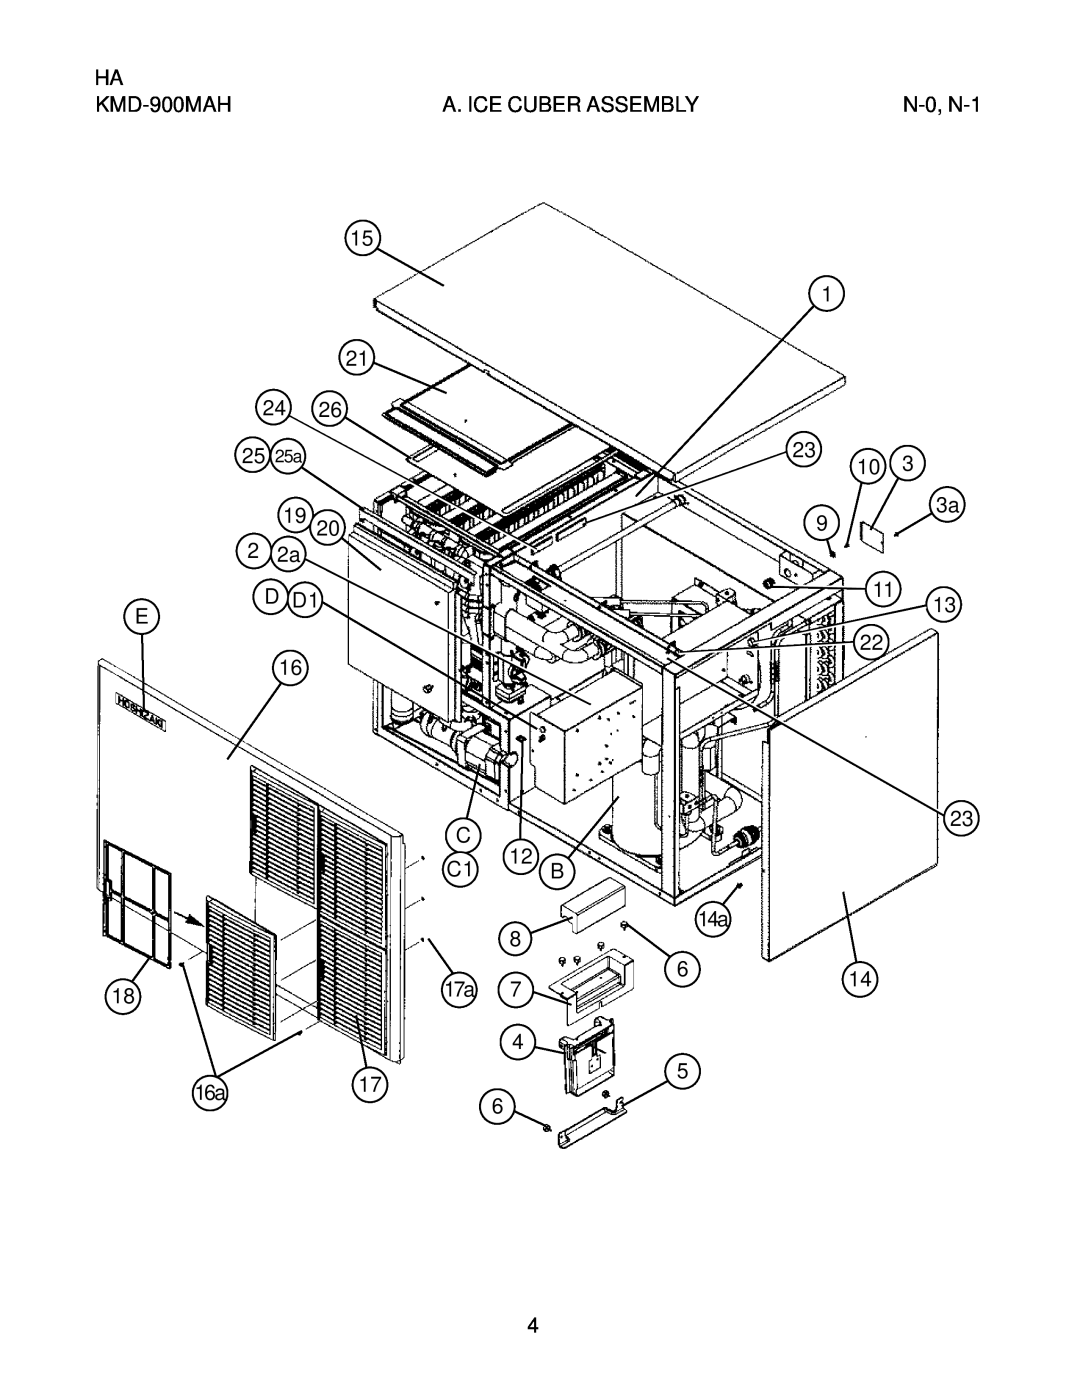 Hoshizaki KMD-900MWH, KMD-900MRH manual HA KMD-900MAH, 25 25a, 2 2a D D1 E, 16a17, A. Ice Cuber Assembly, N-0, N-1, 12 B 